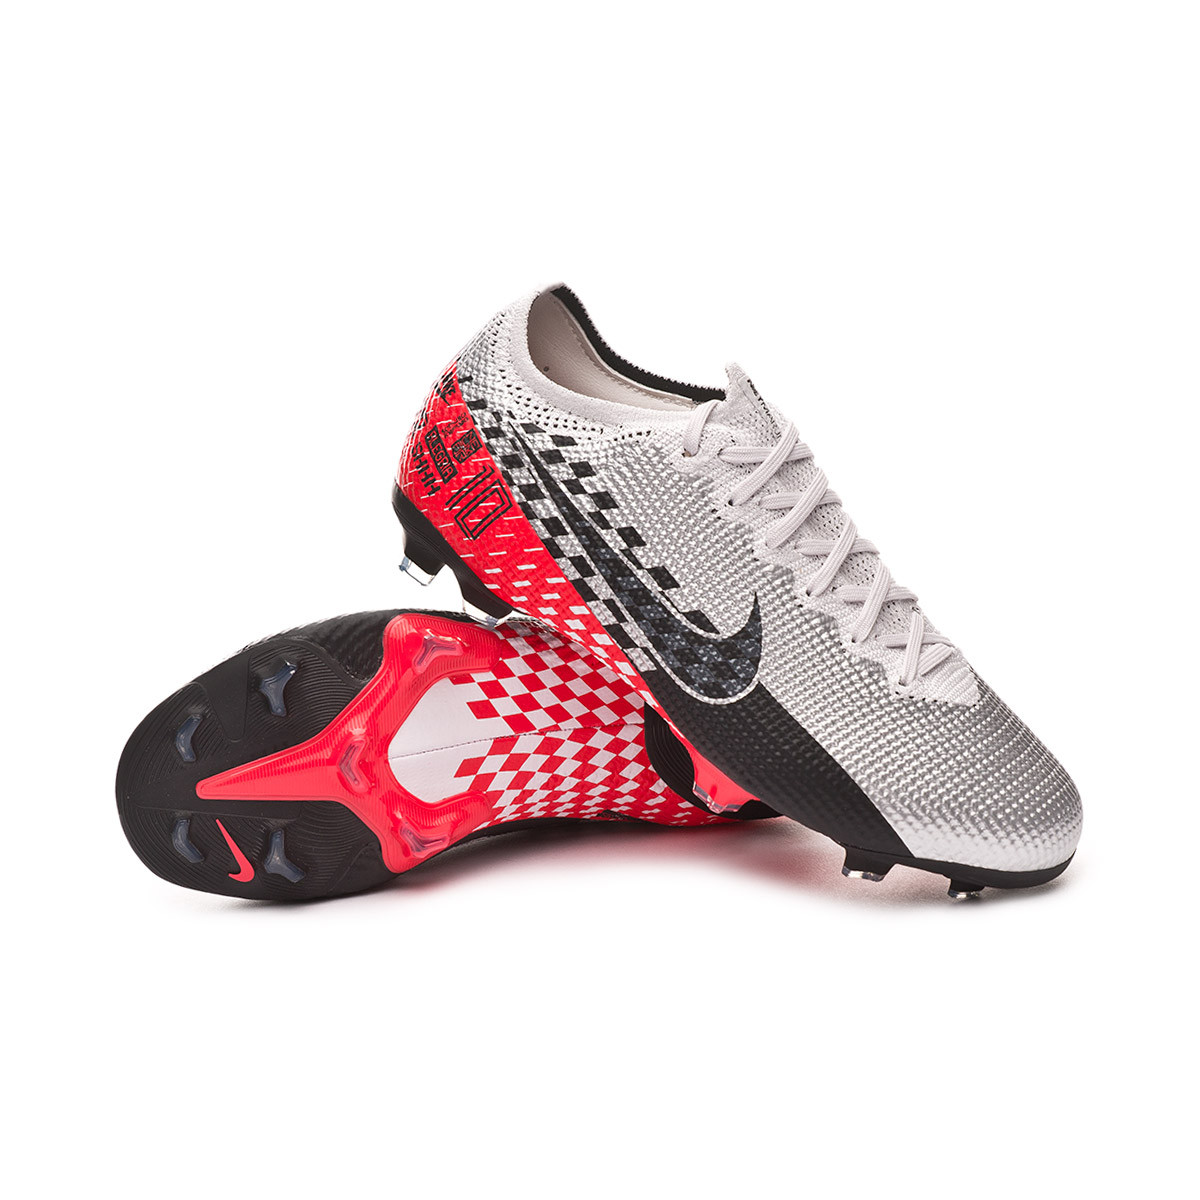 Football Boots Nike Kids Mercurial Vapor XIII Elite FG Neymar Jr  Chrome-Black-Red orbit-Platinum tint - Football store Fútbol Emotion